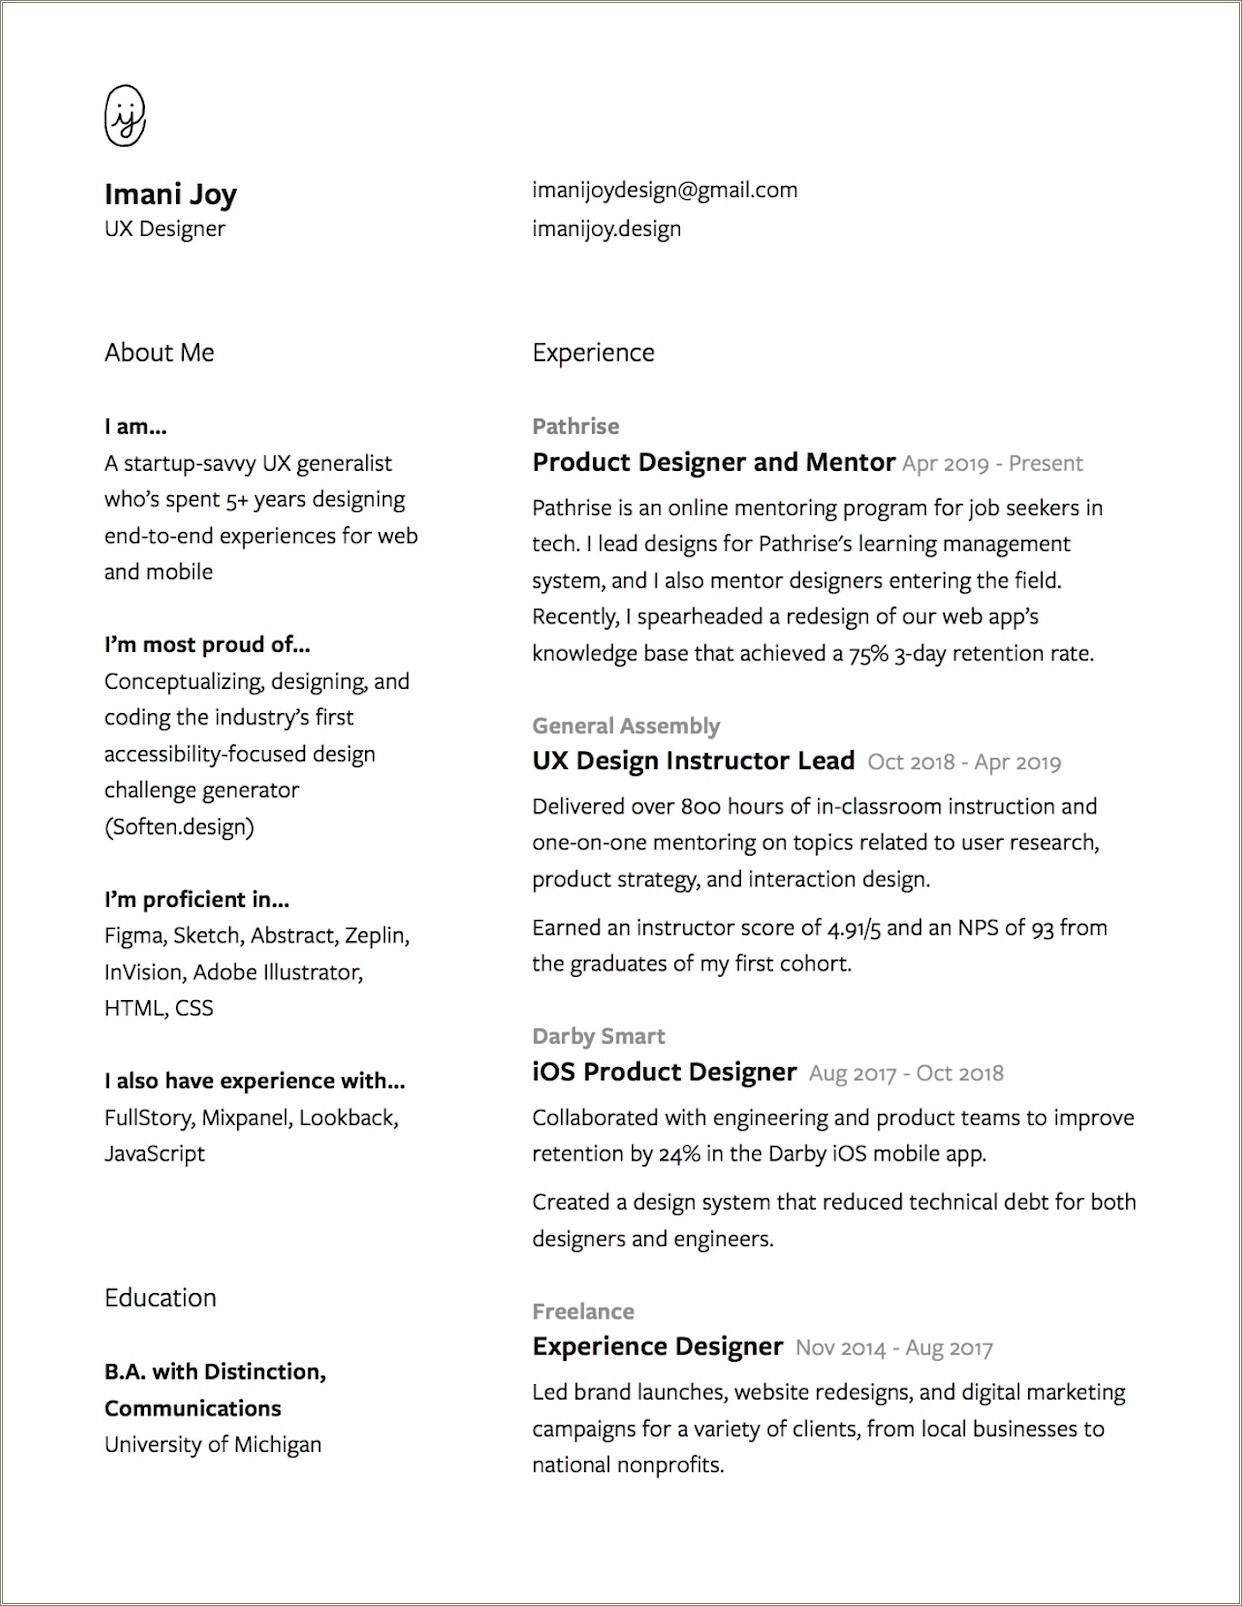 Resume Example For Web Designer Freelance